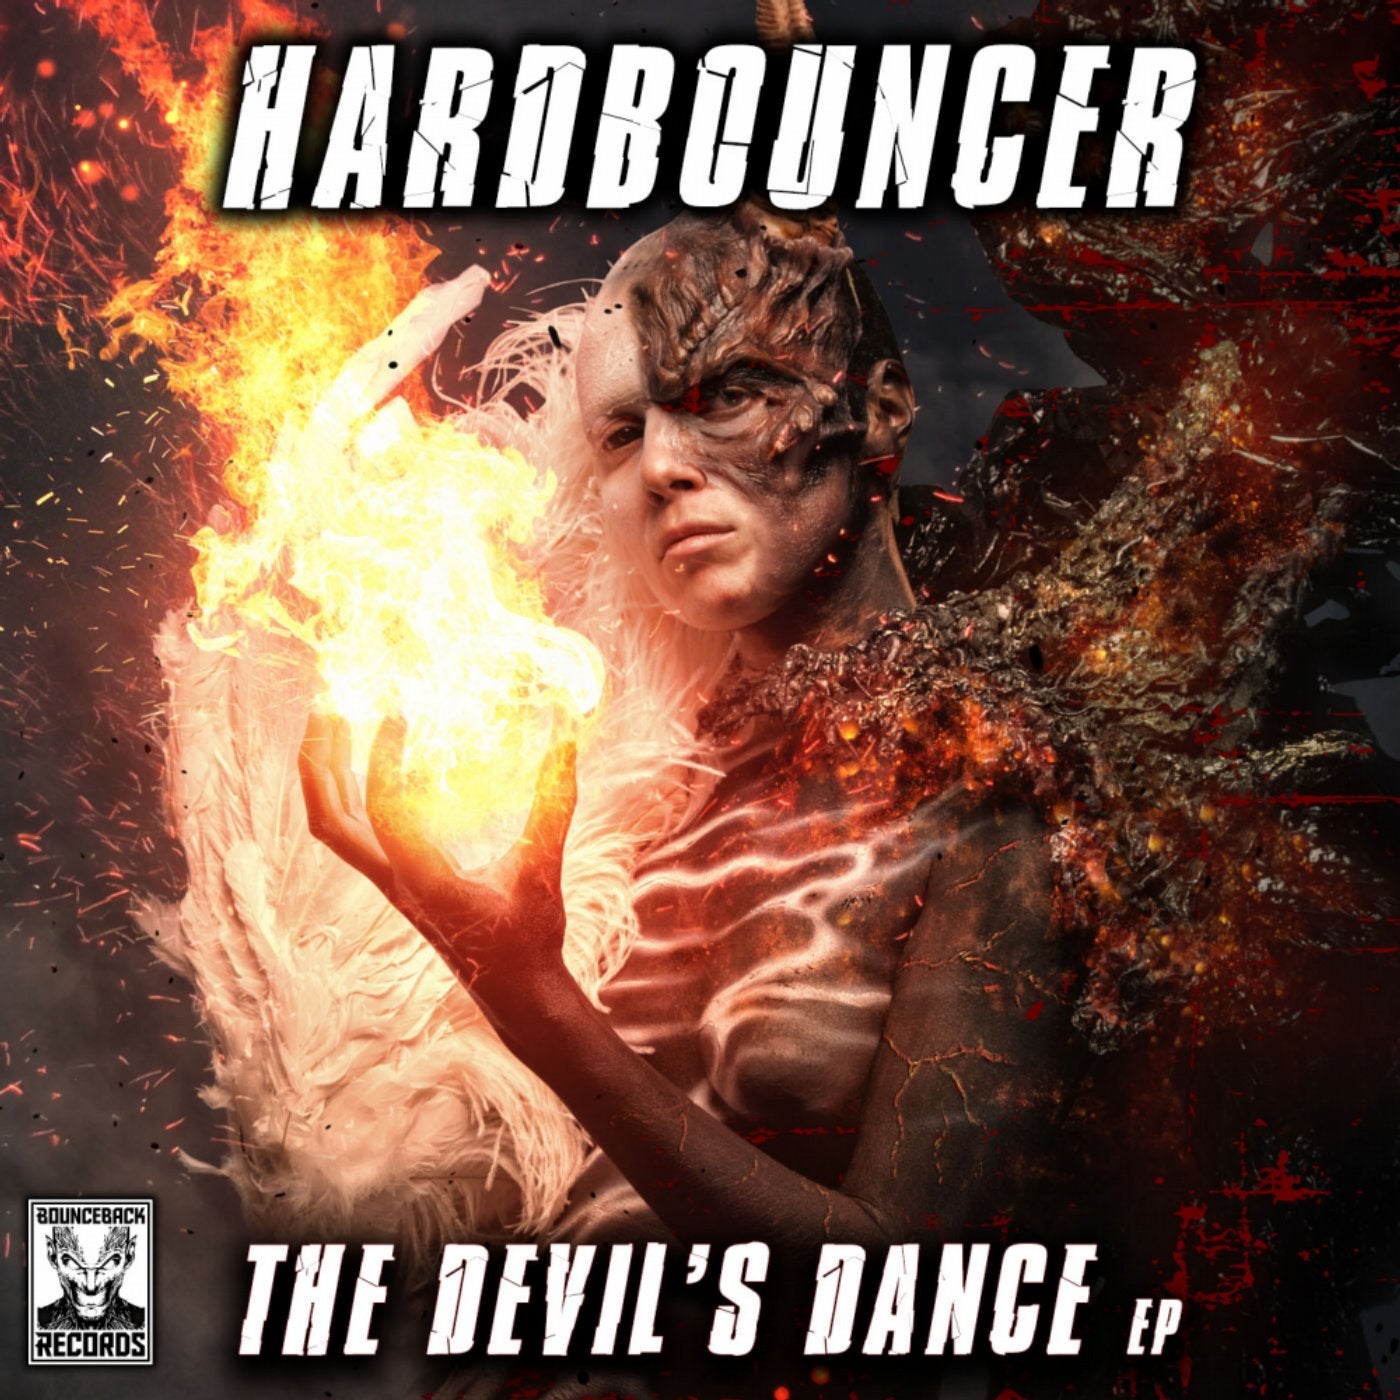 The Devil's Dance EP